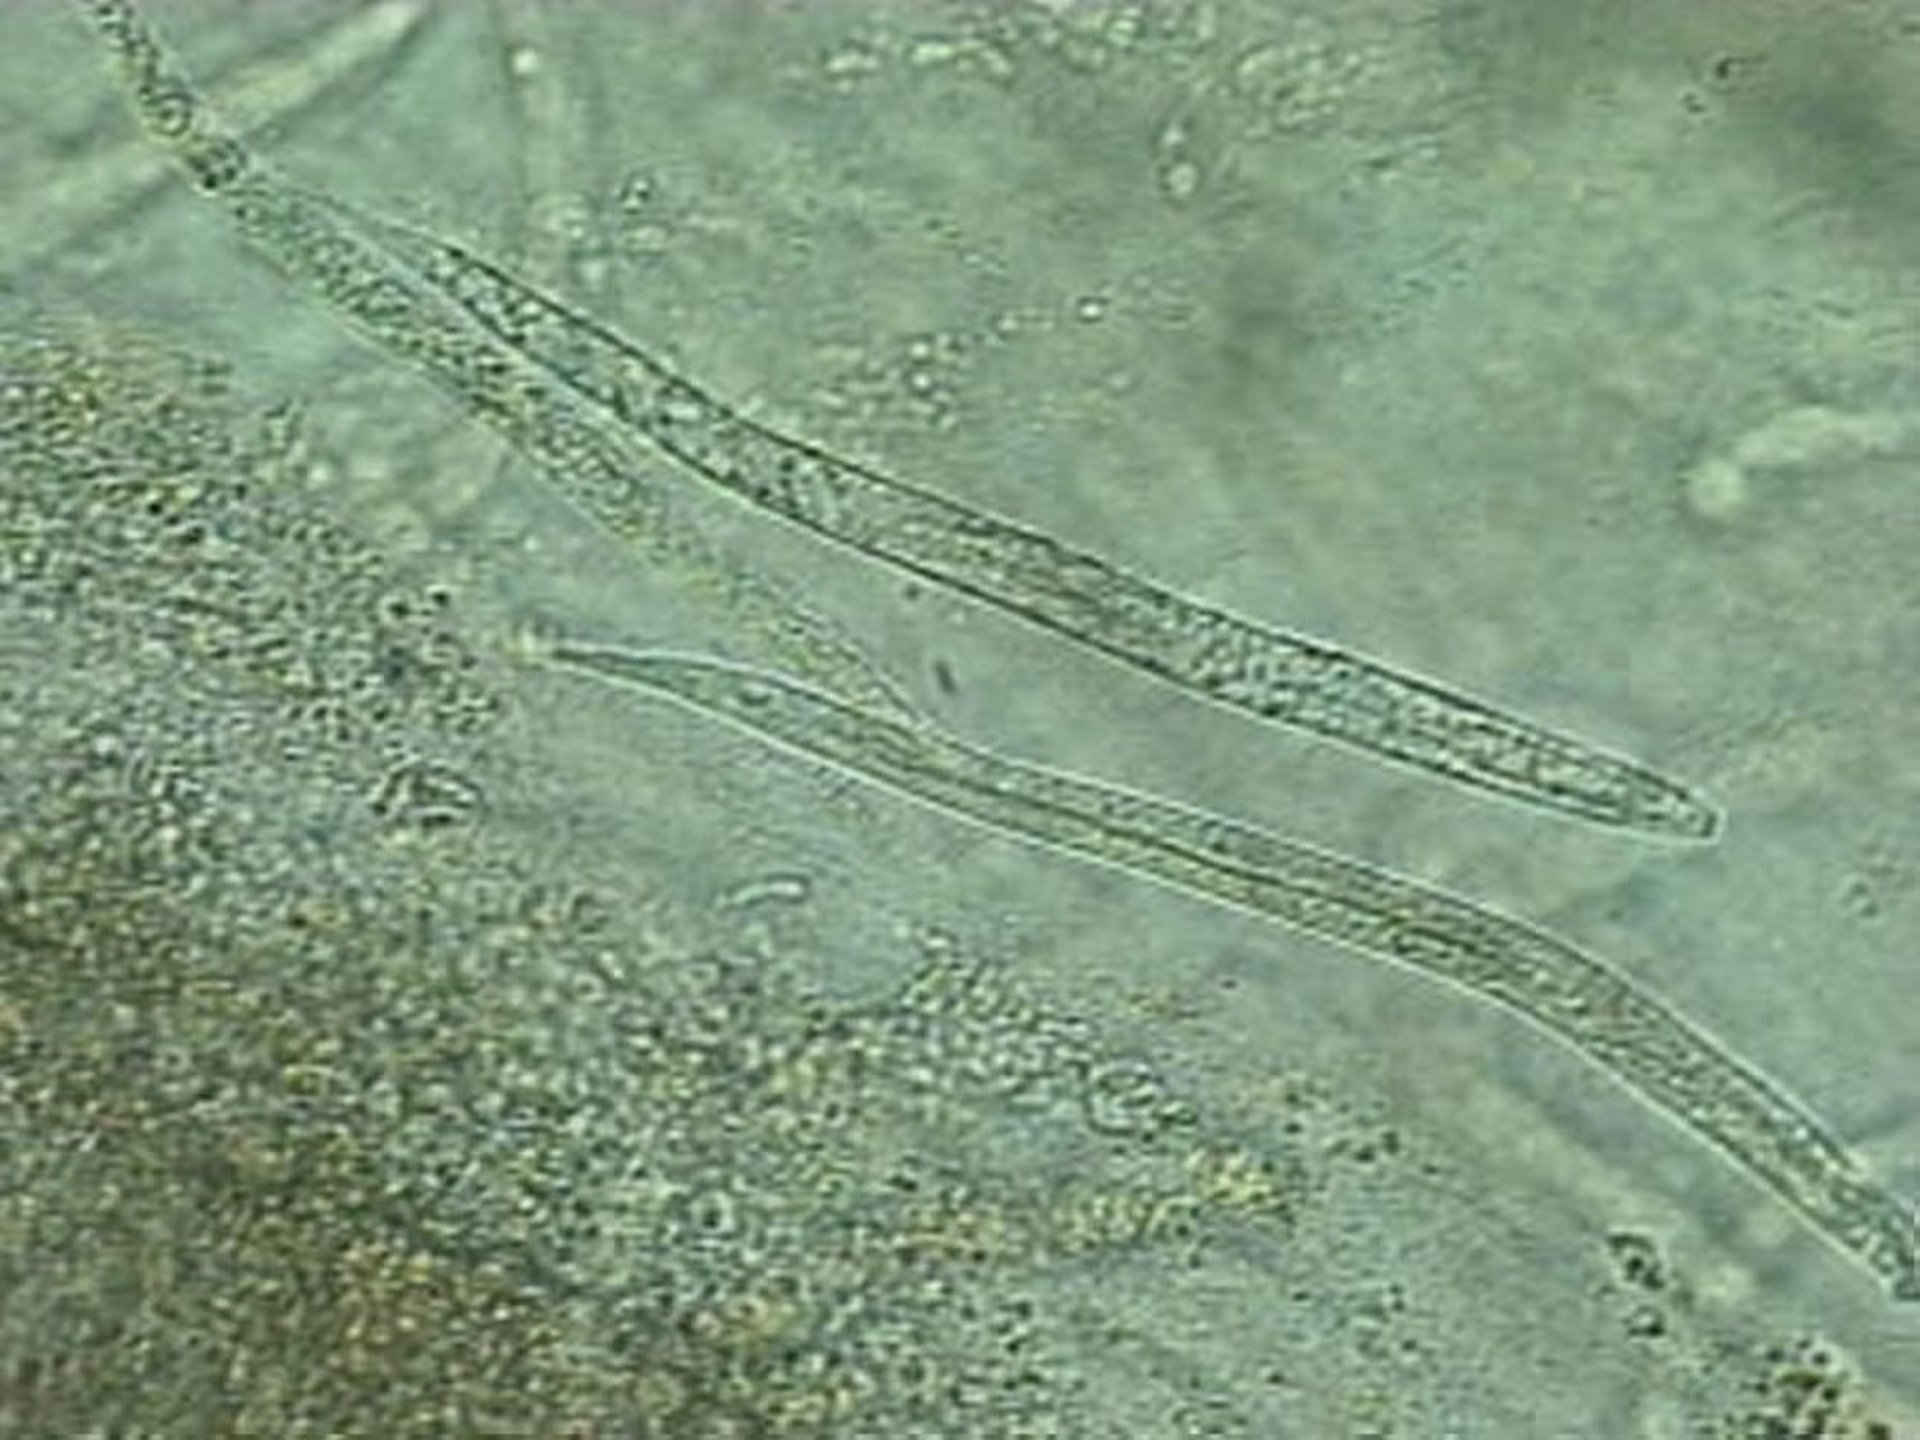 Gastrointestinal nematode, amphibian